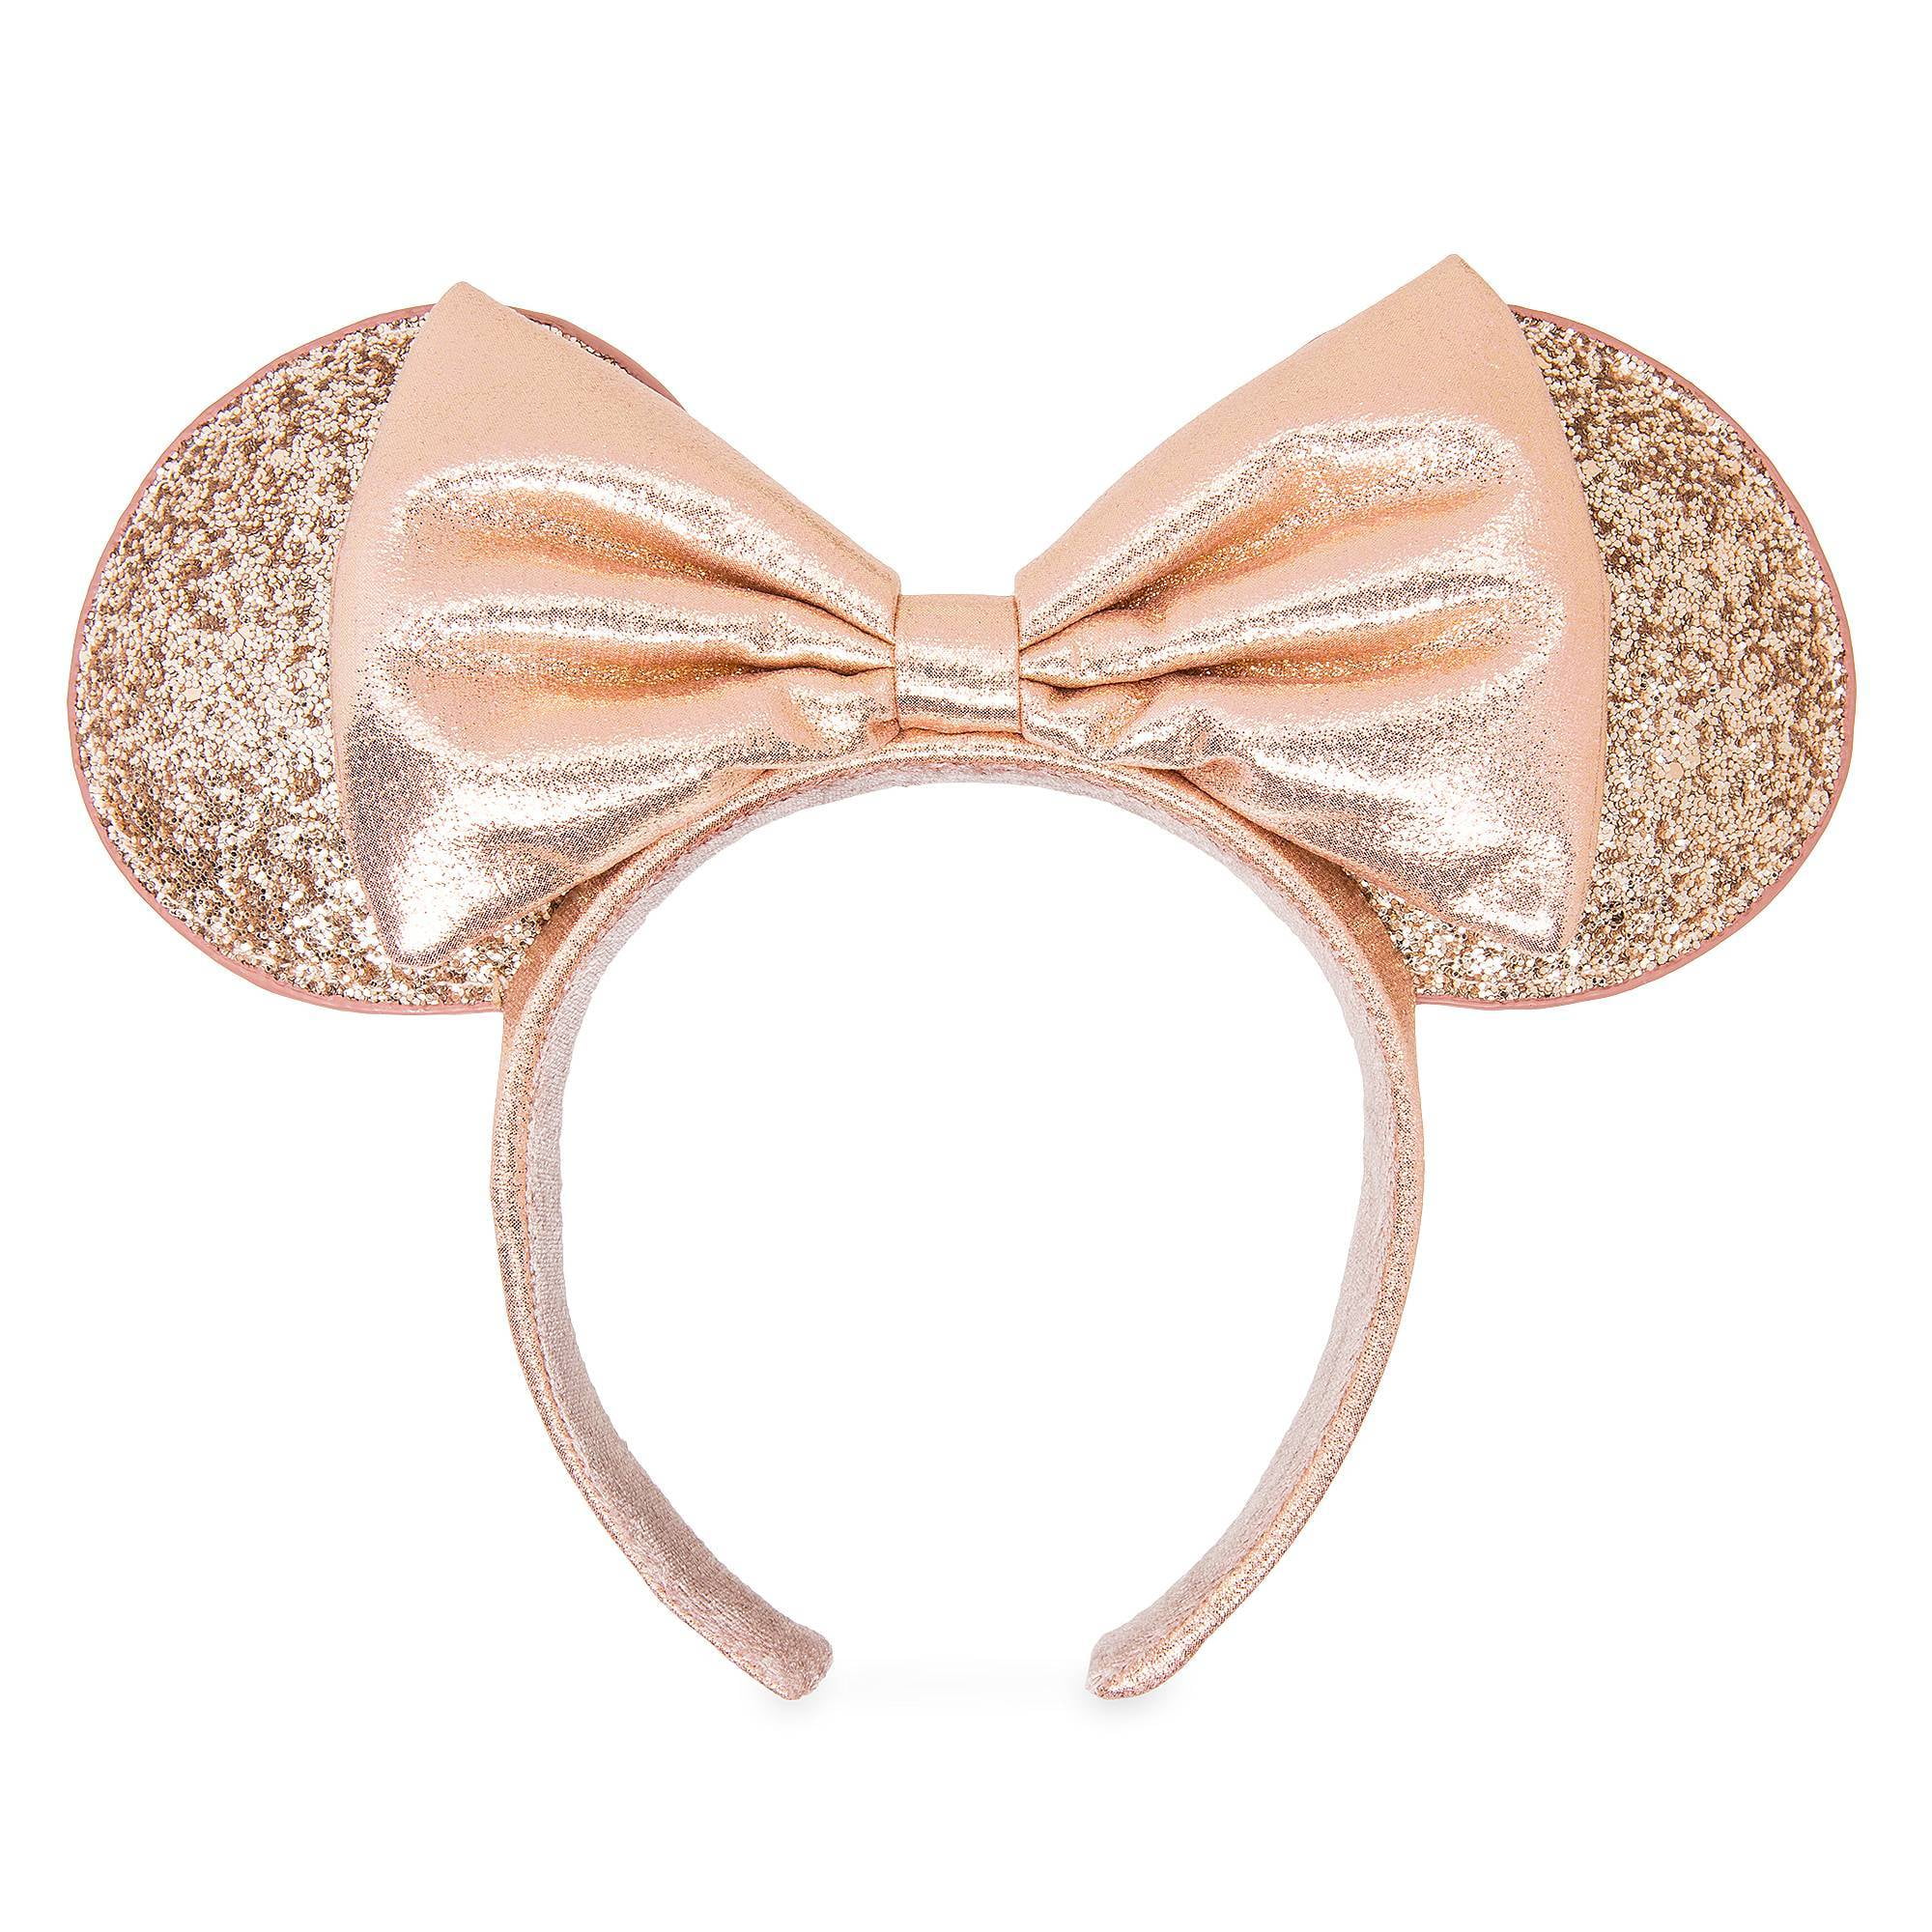 NEW Disney Parks Millennial Pink Minnie Mouse Bow Sequins Ear Headband 